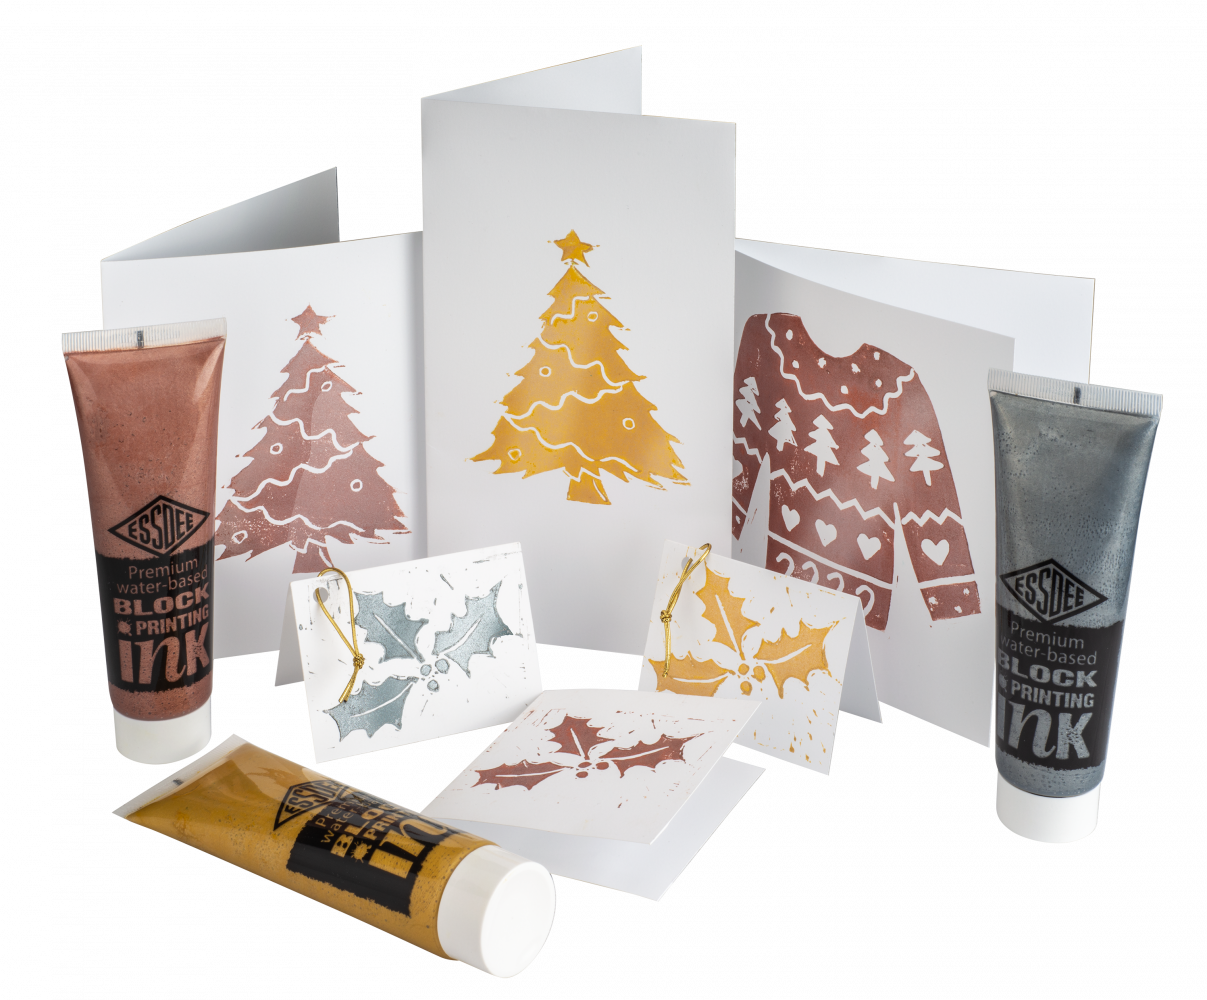 Essdee MasterCut Stamp Carving Kit